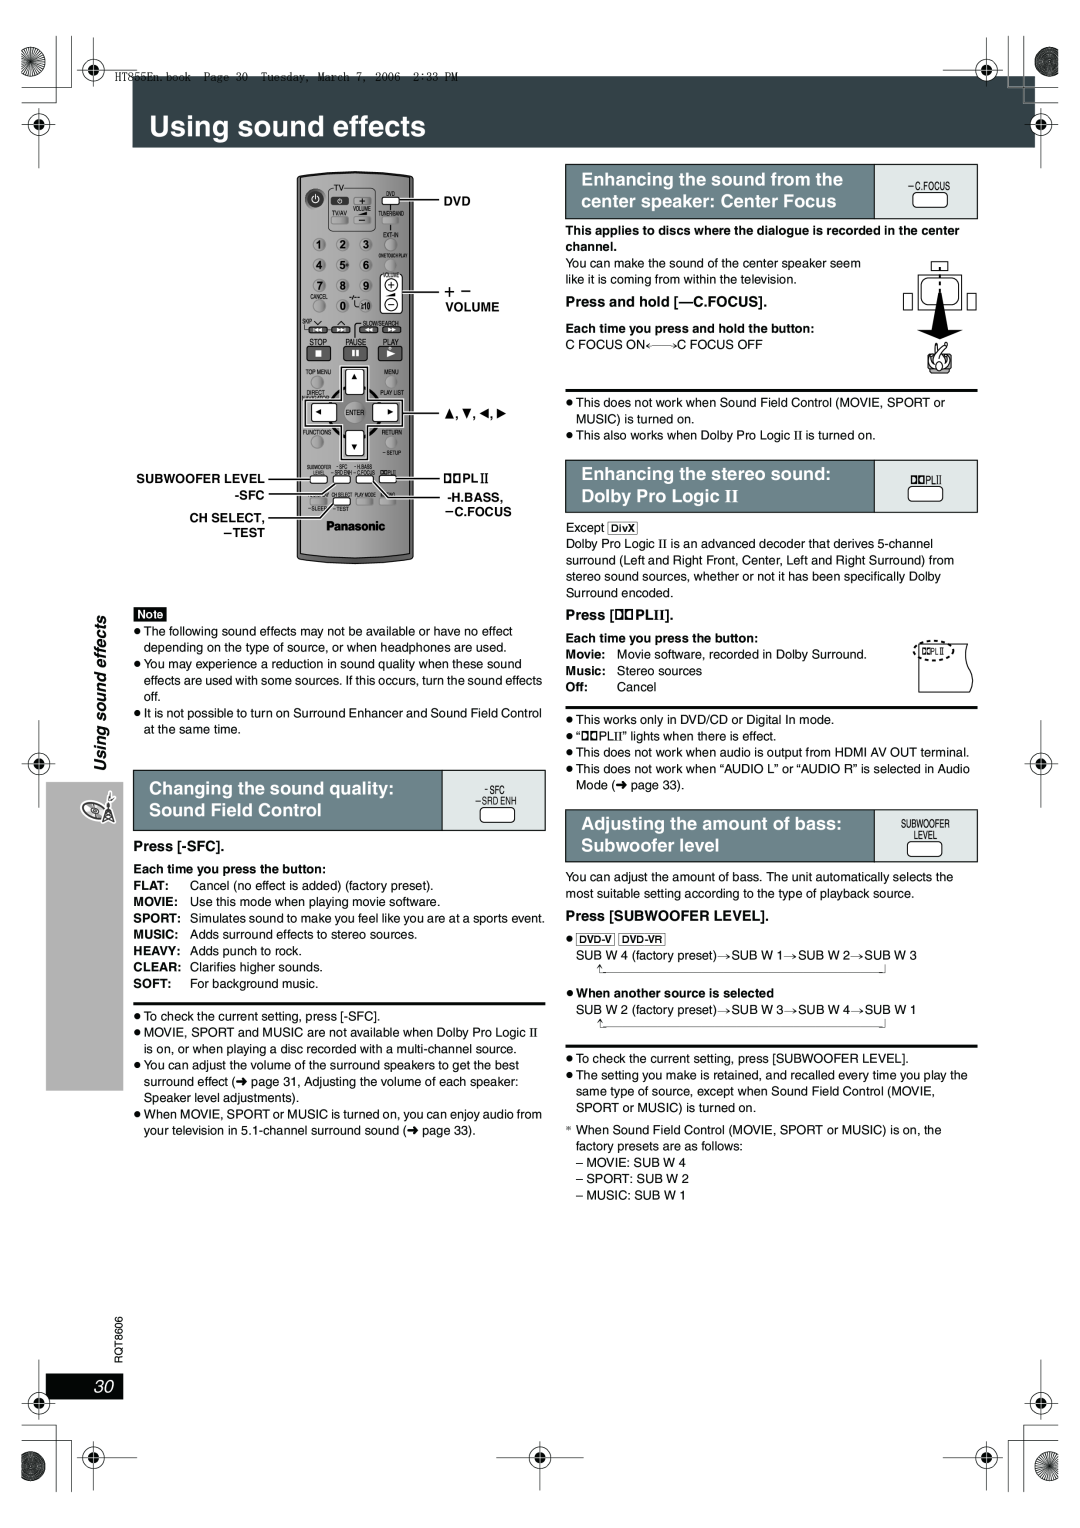 Panasonic SC-HT855 manual Using sound effects, Changing the sound quality, Sound Field Control, Press -SFC, Press ÎPLII 